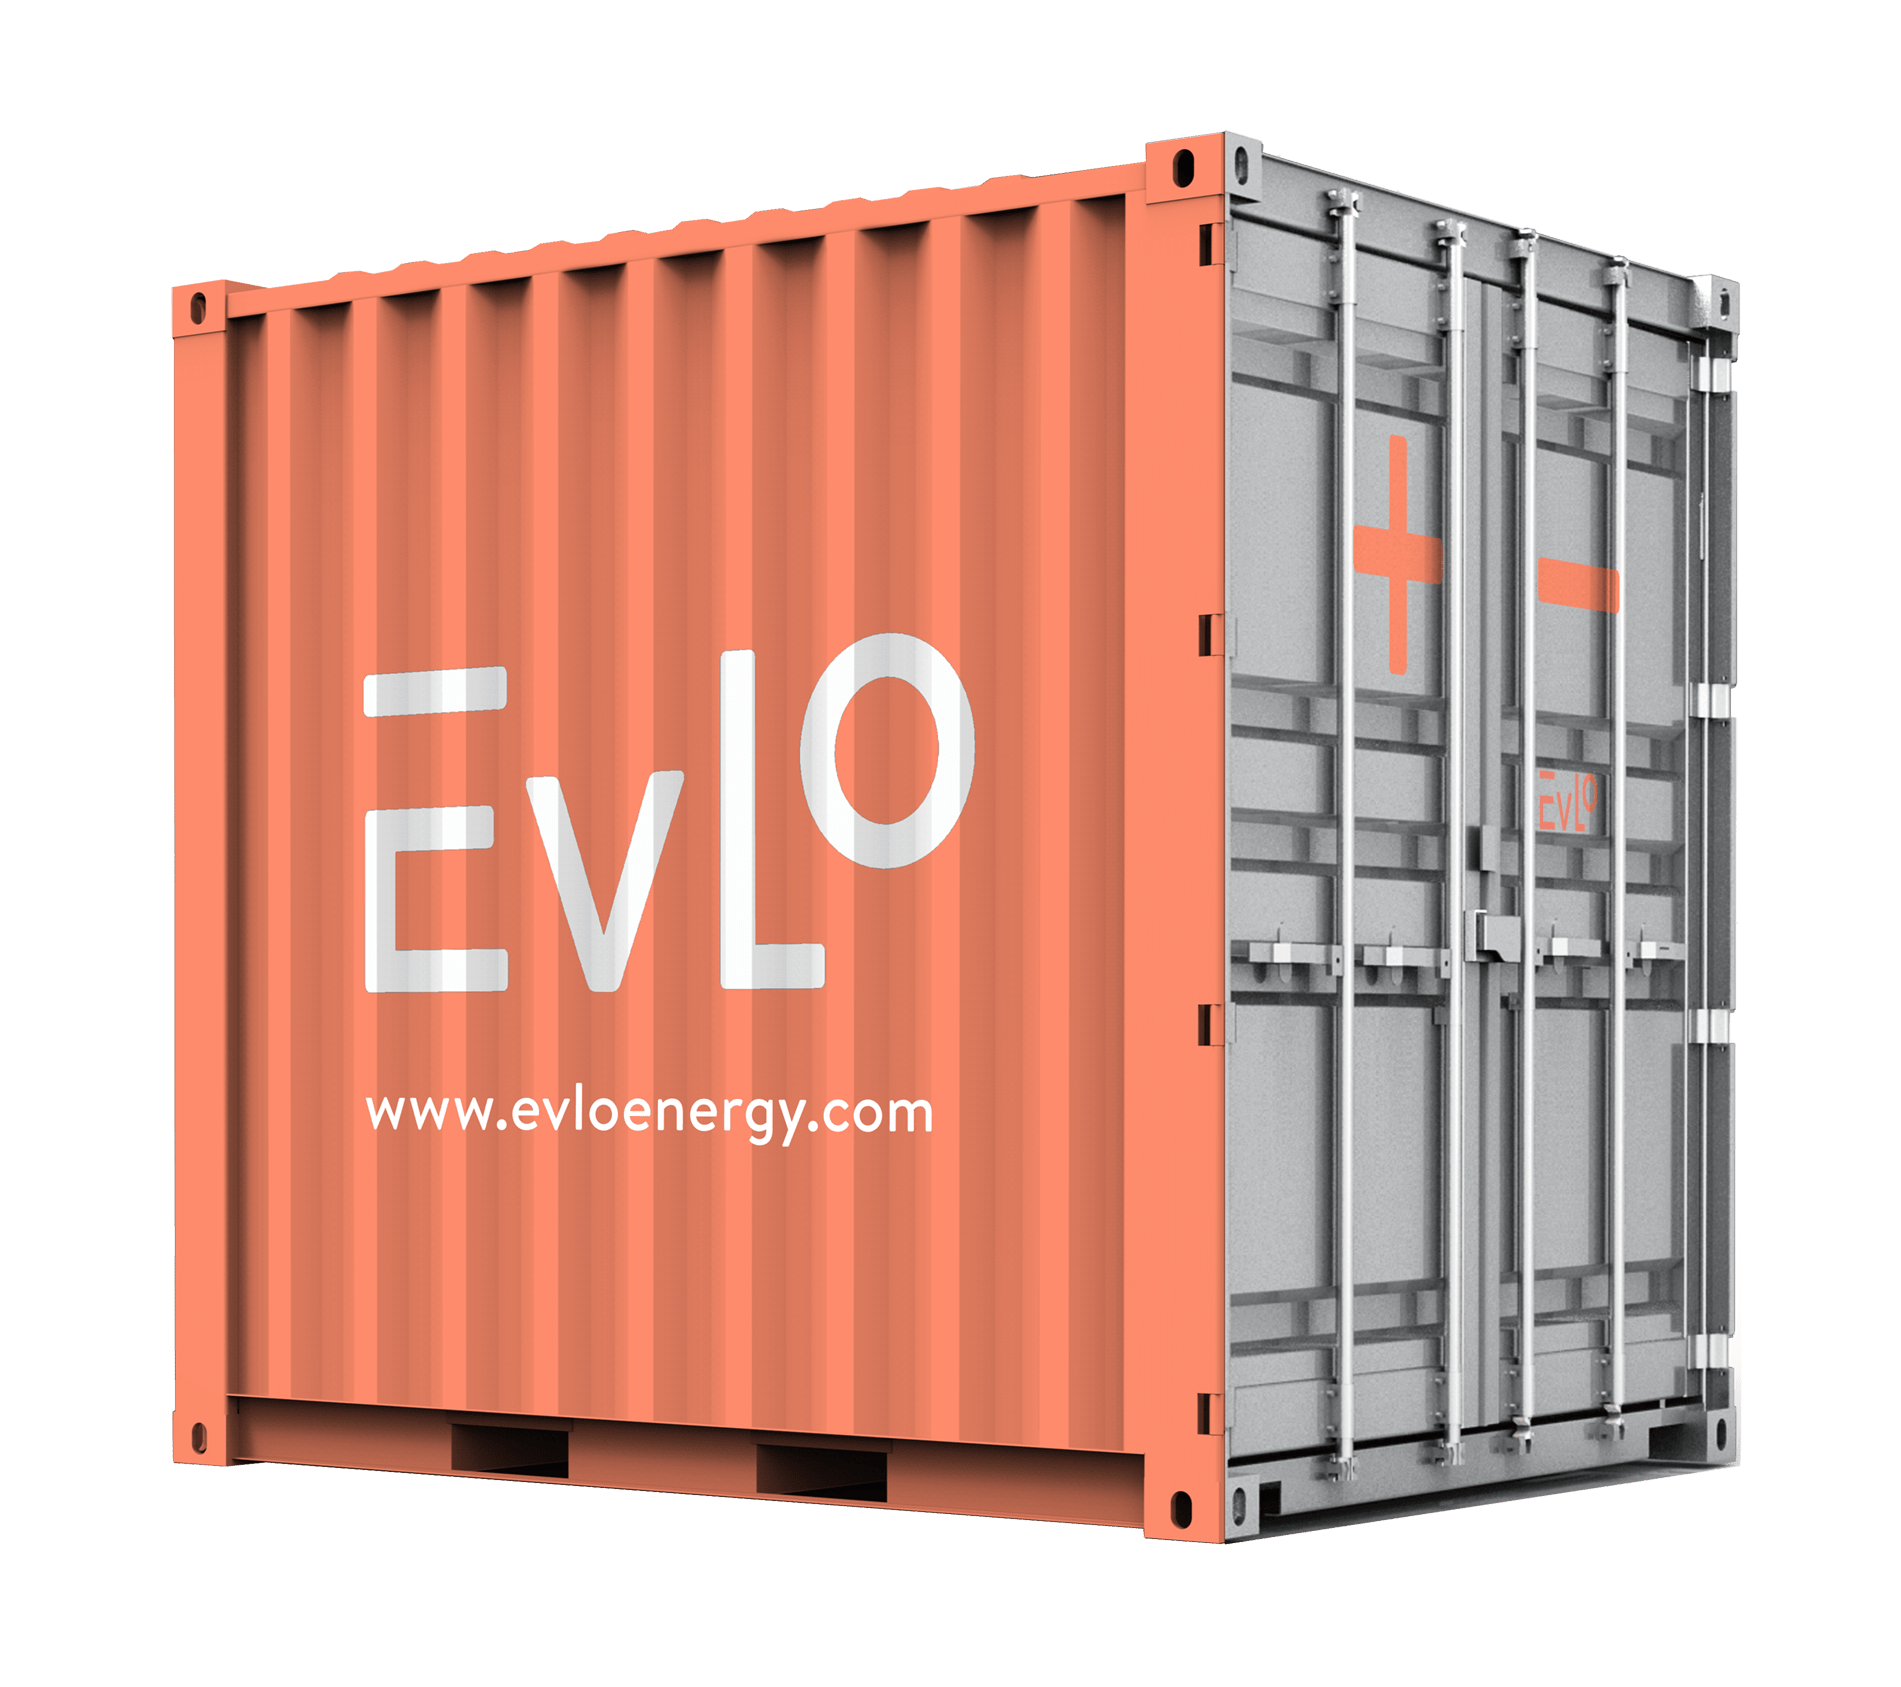 EVLO energy storage system